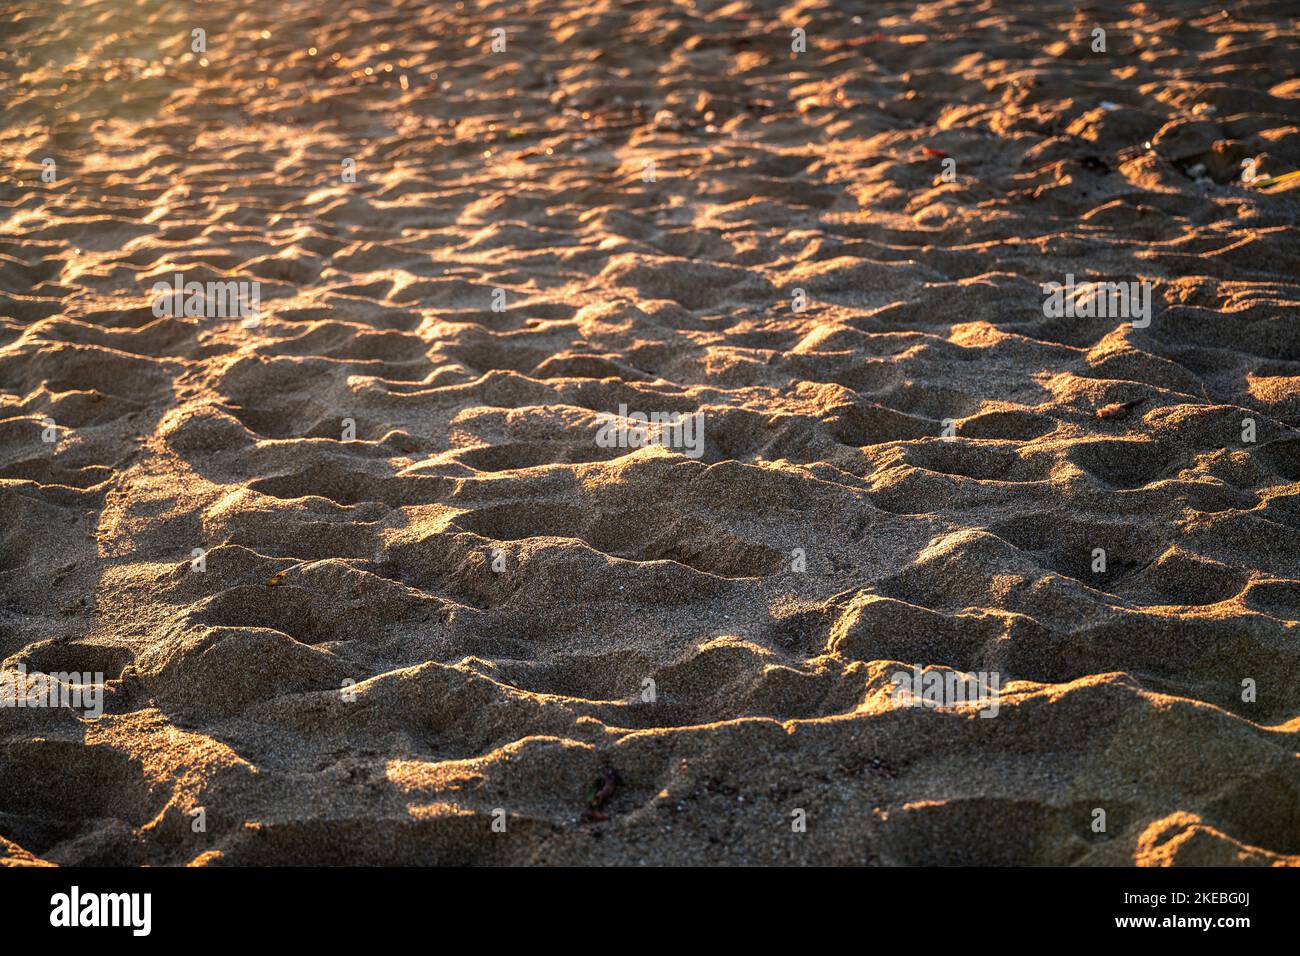 Rippled beach sand in warm sunrise illumination. Stock Photo